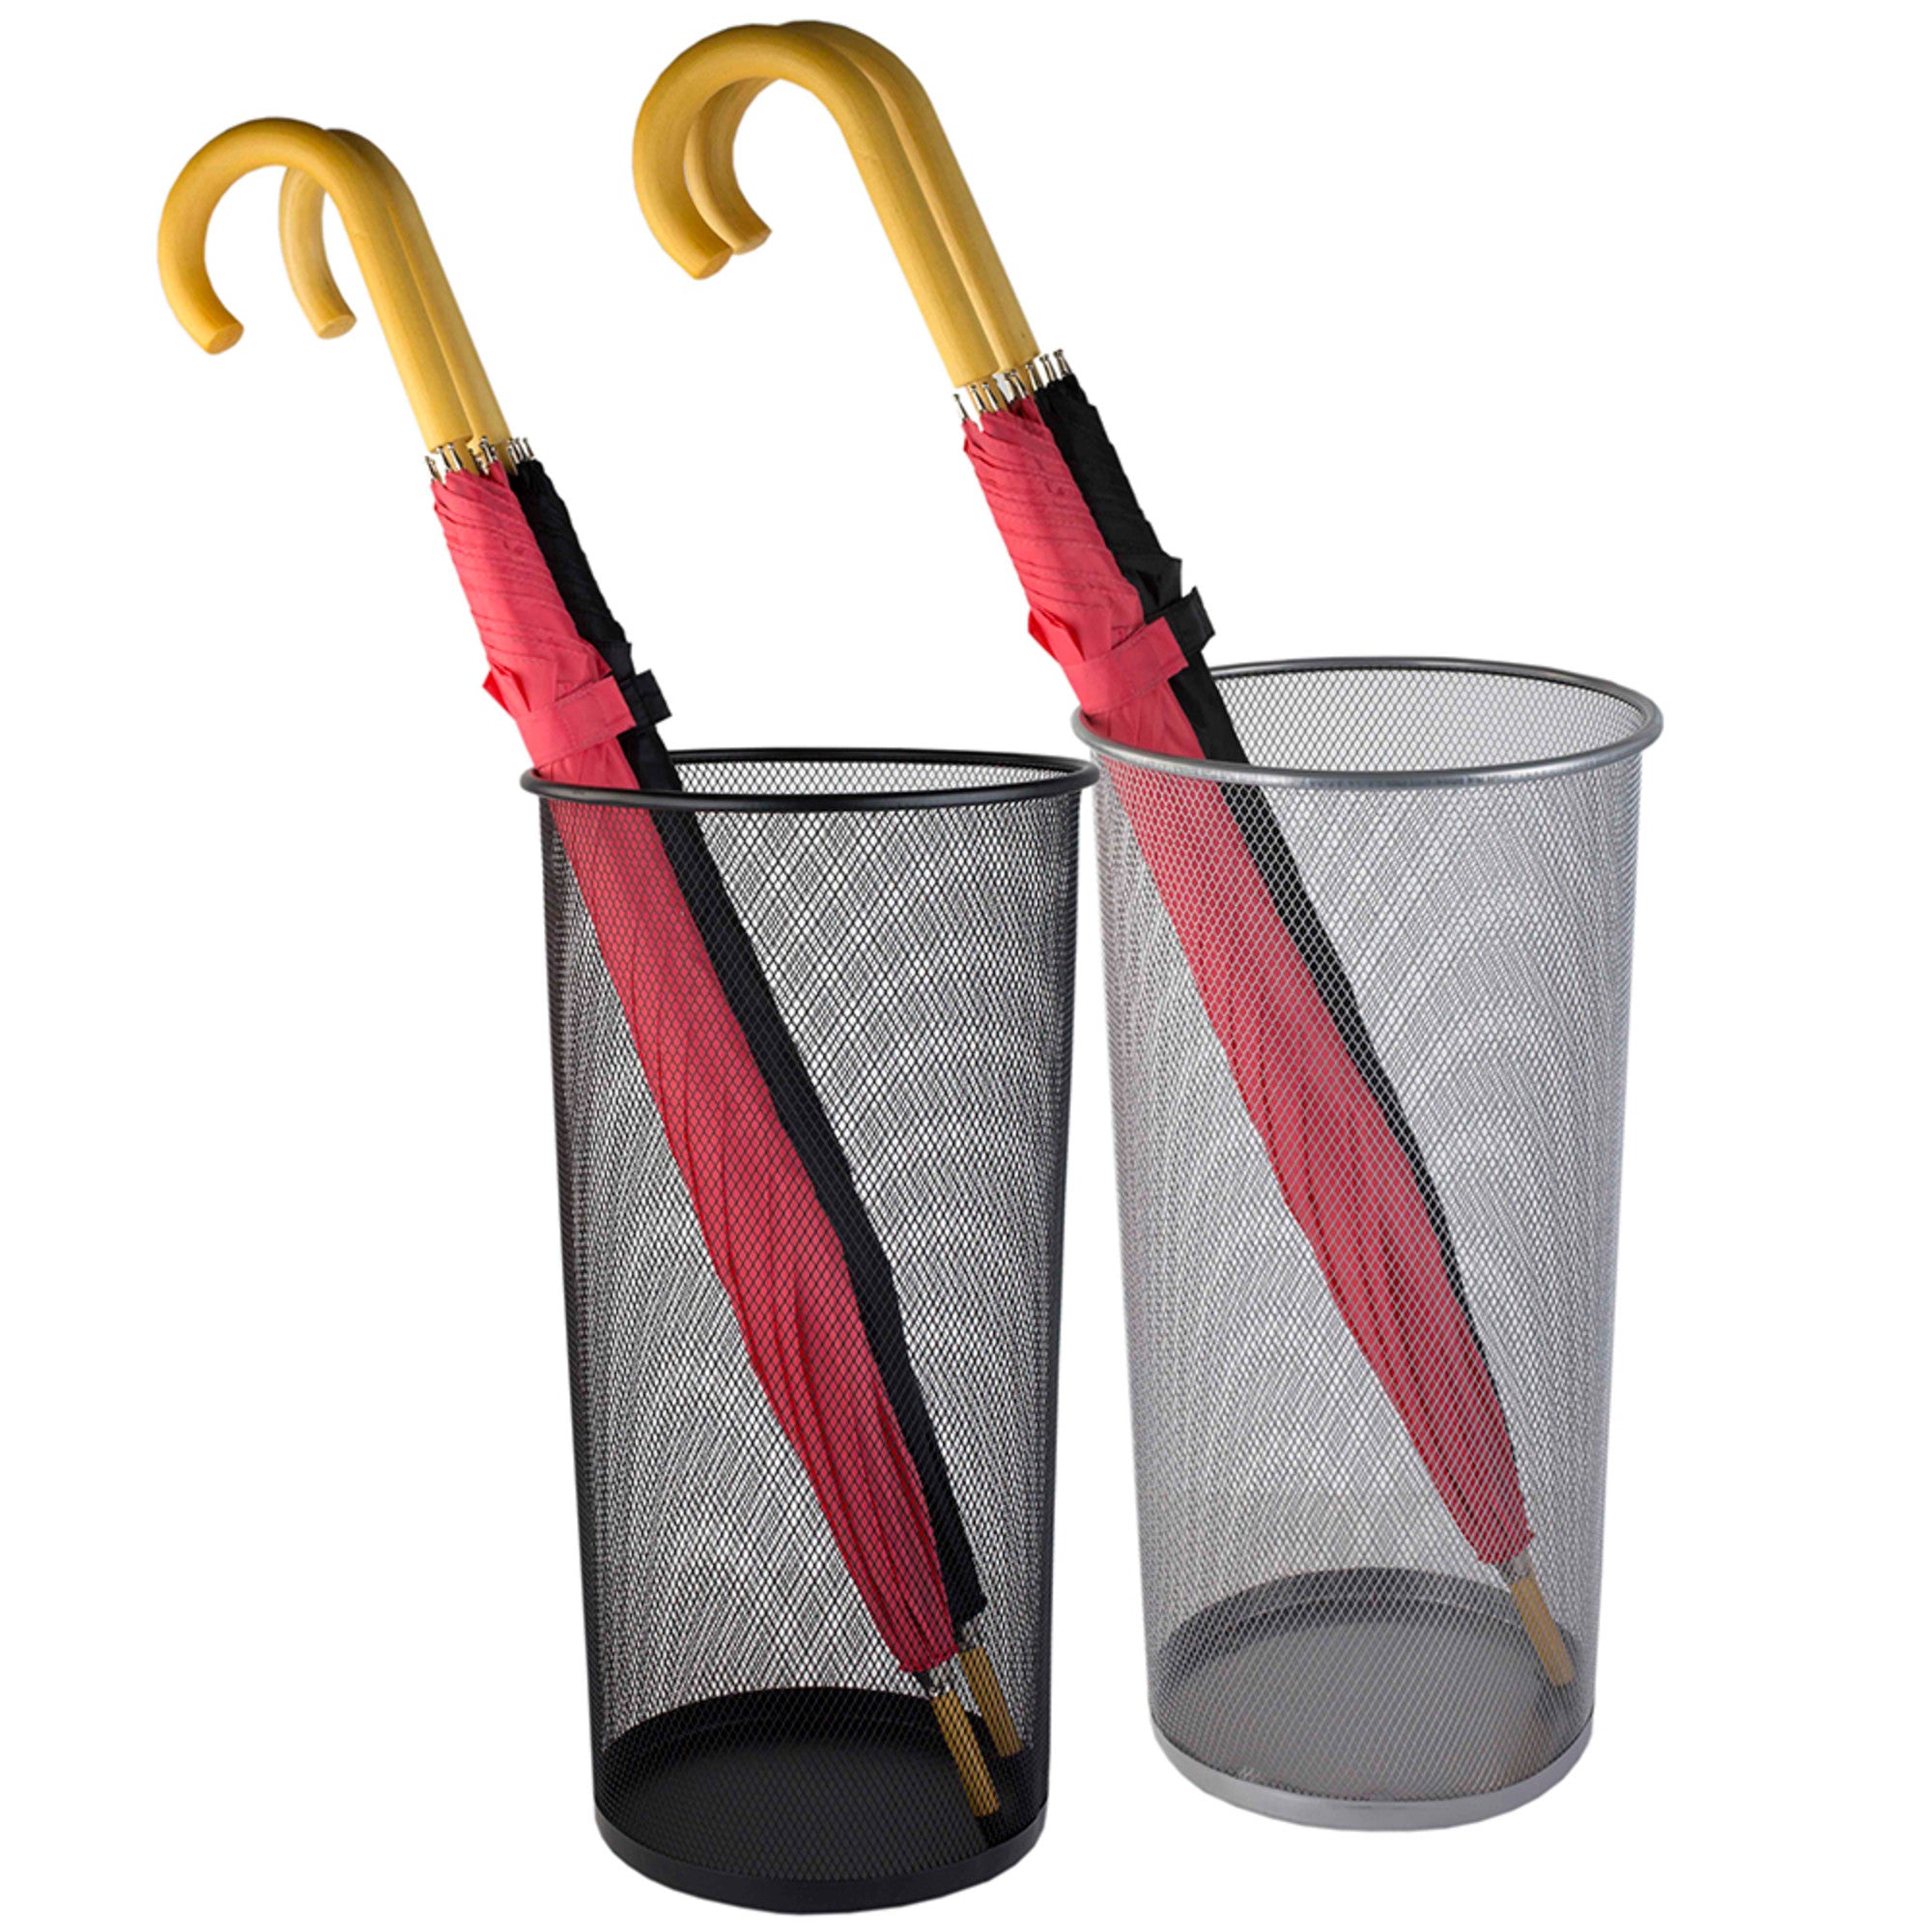 Home Basics Mesh Steel Umbrella Holder - Assorted Colors